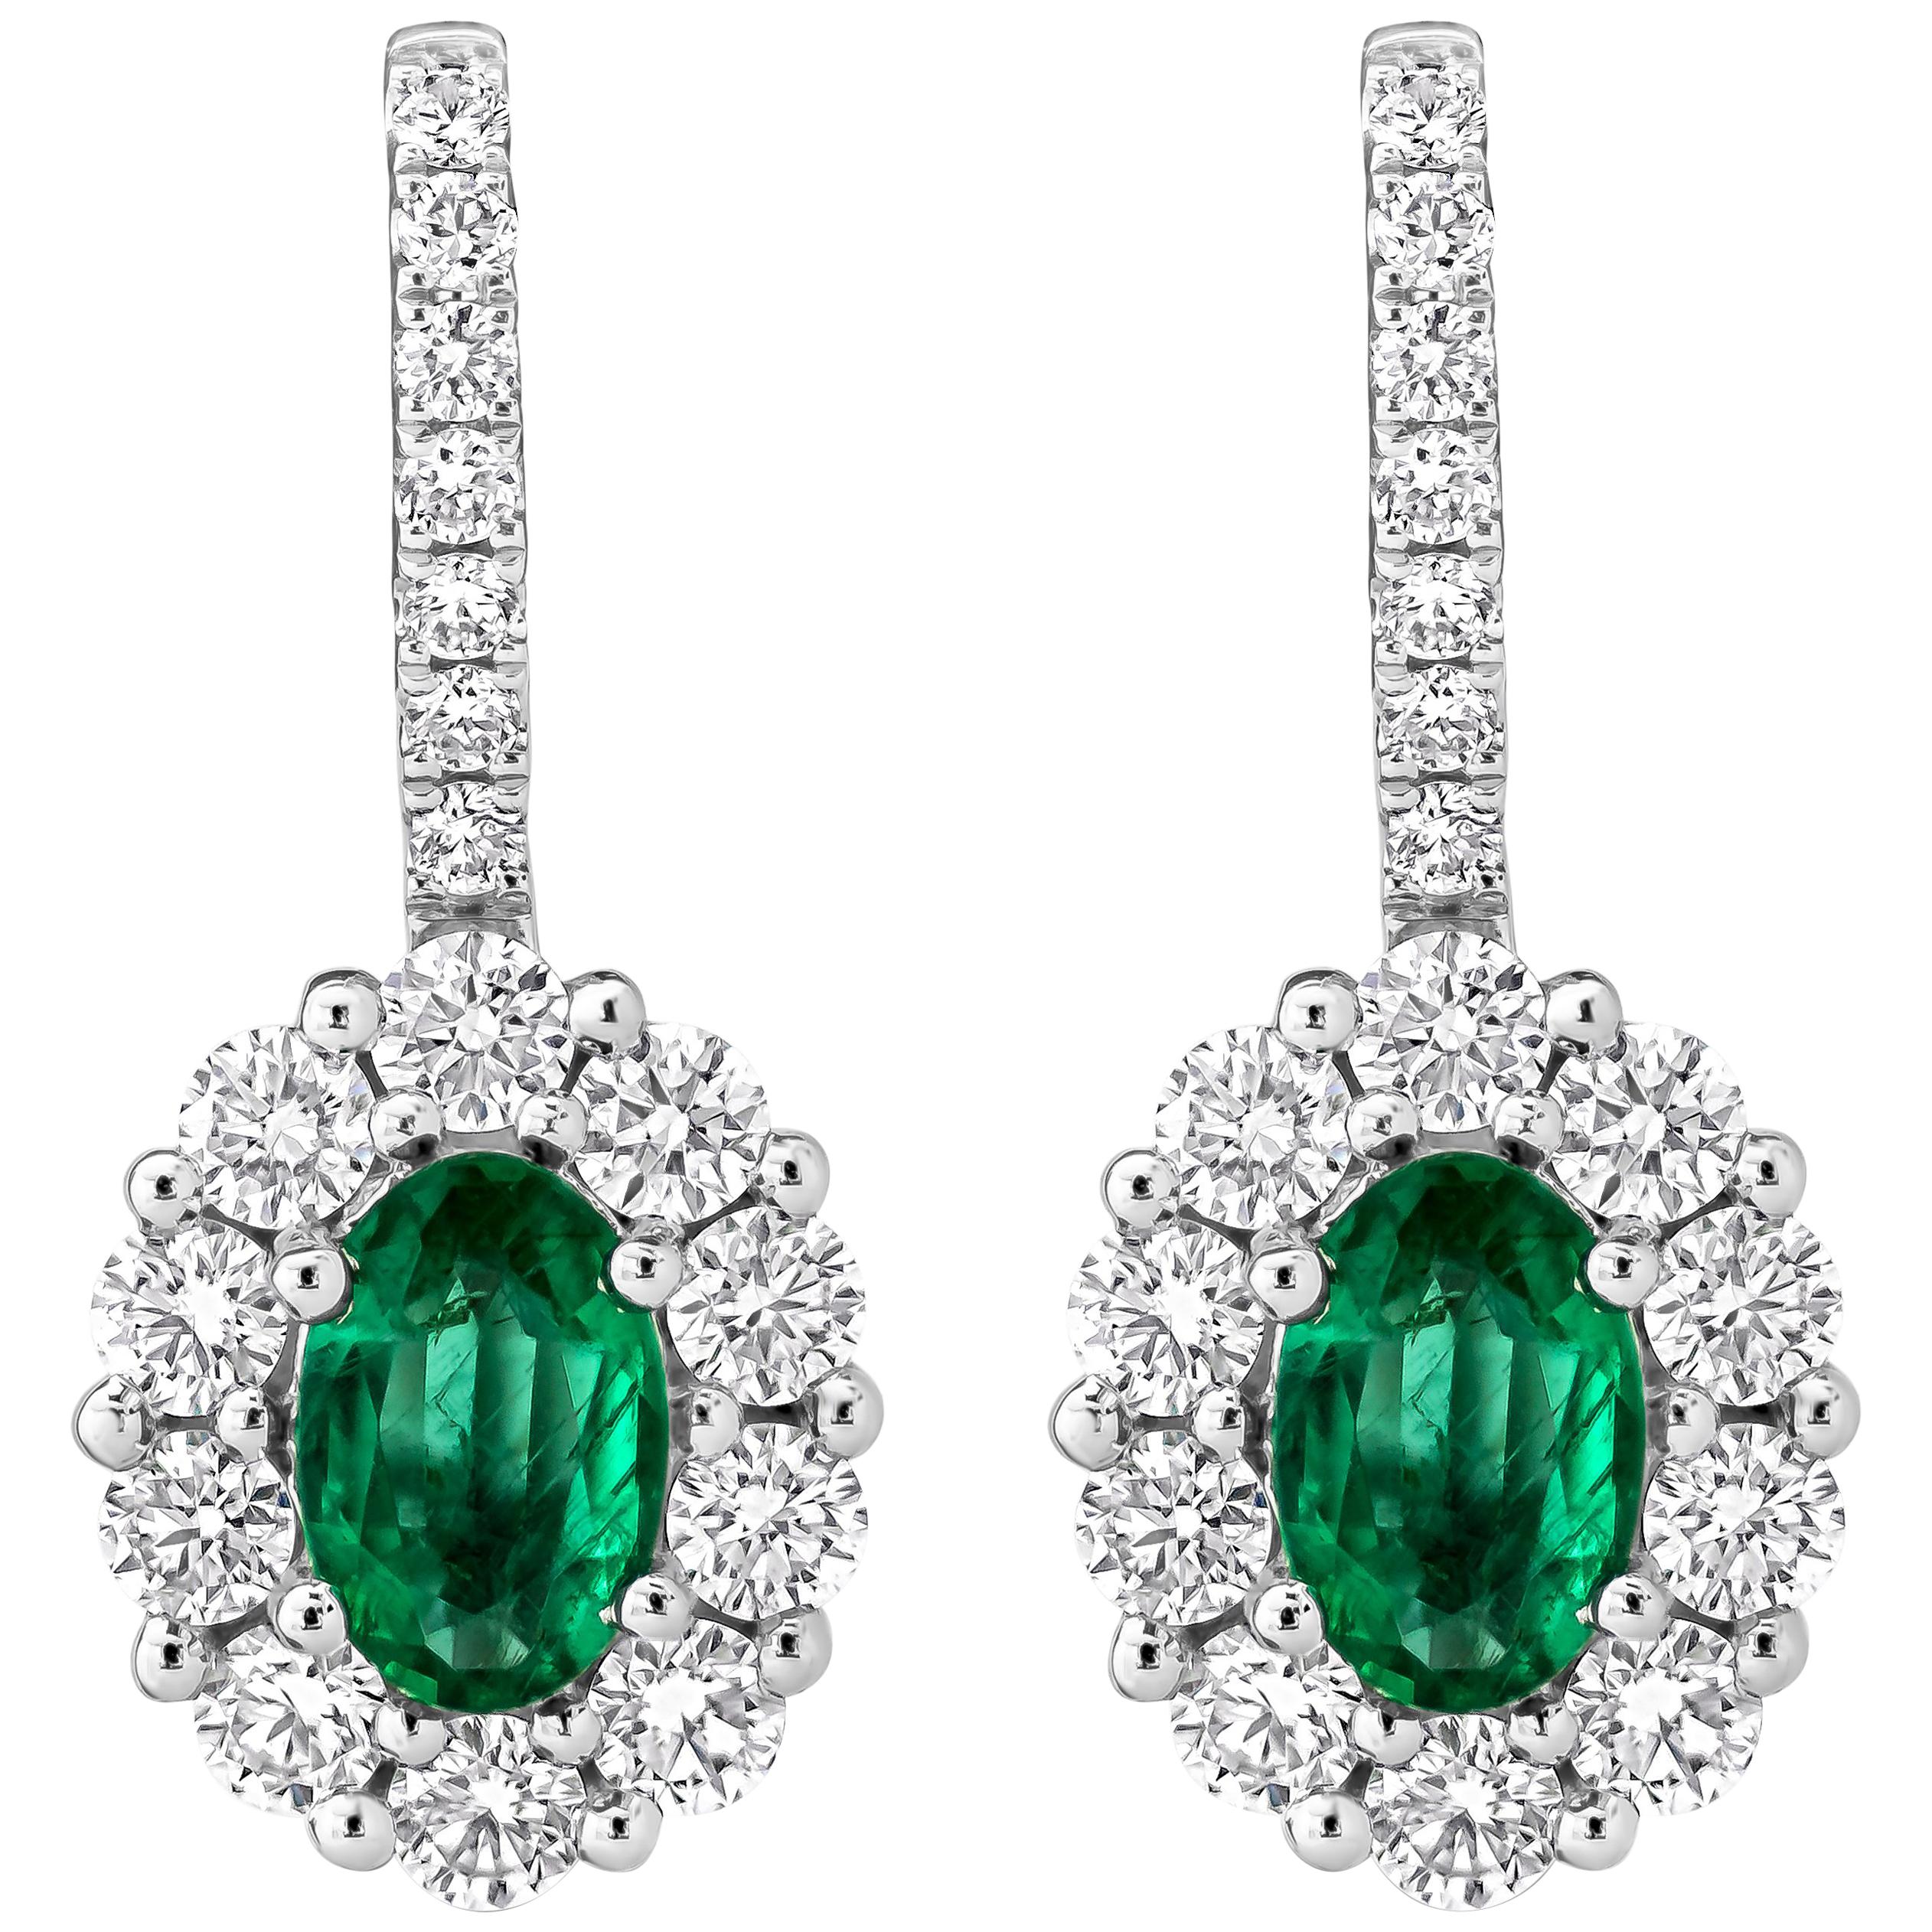 Roman Malakov 0.78 Carat Oval Cut Emerald and Diamond Halo Lever-Back Earrings For Sale